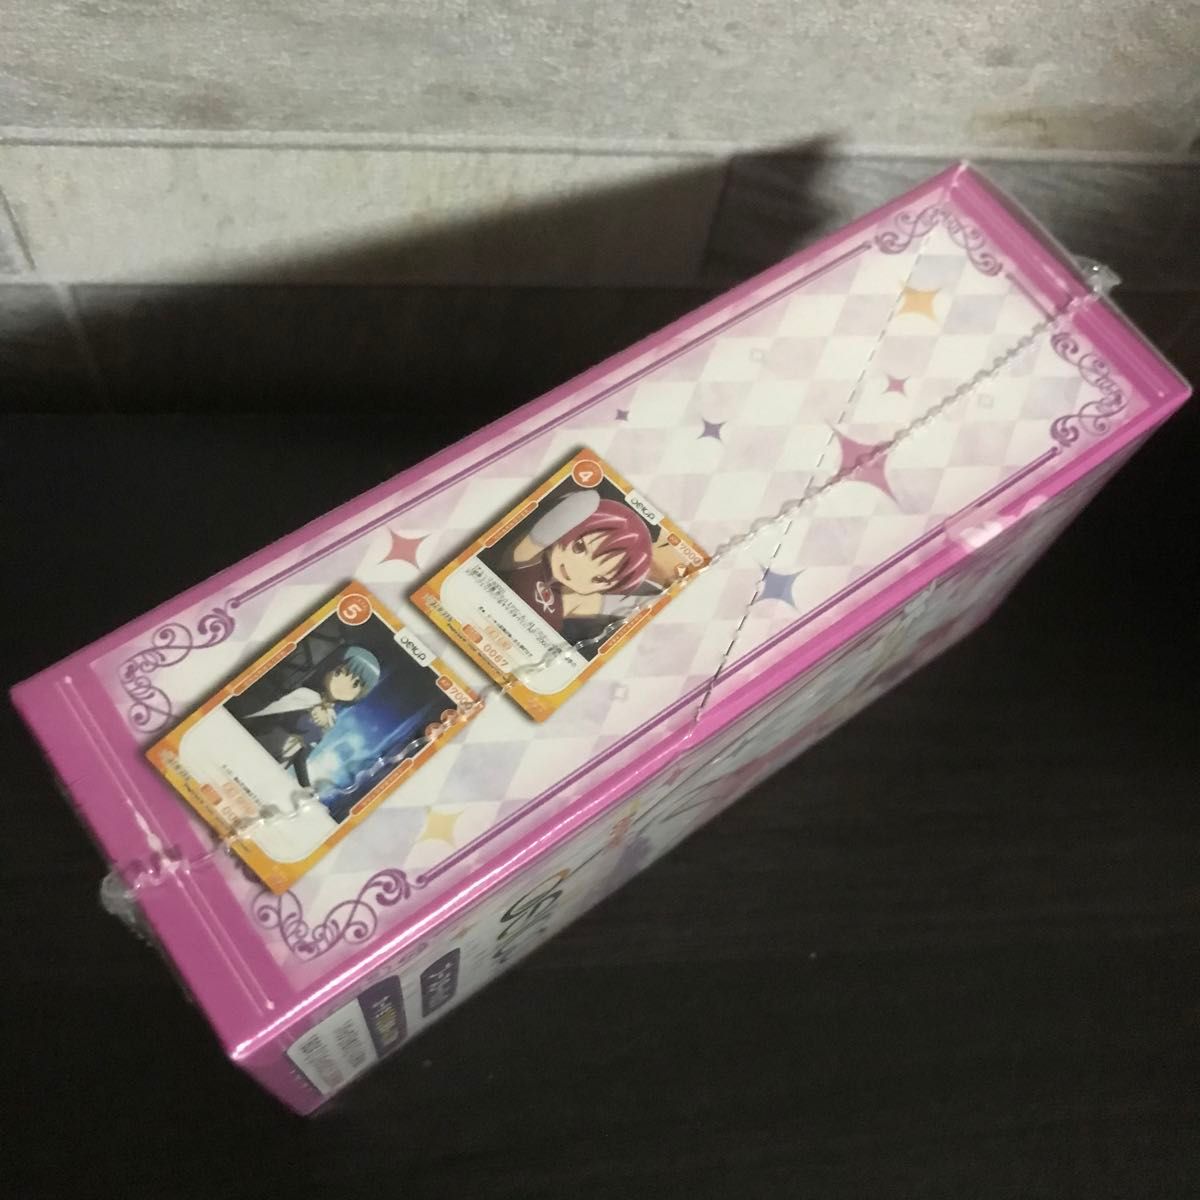 OSICA 「魔法少女まどか☆マギカ」 シリーズ ブースターパック 12パック入りBOX [ムービック]